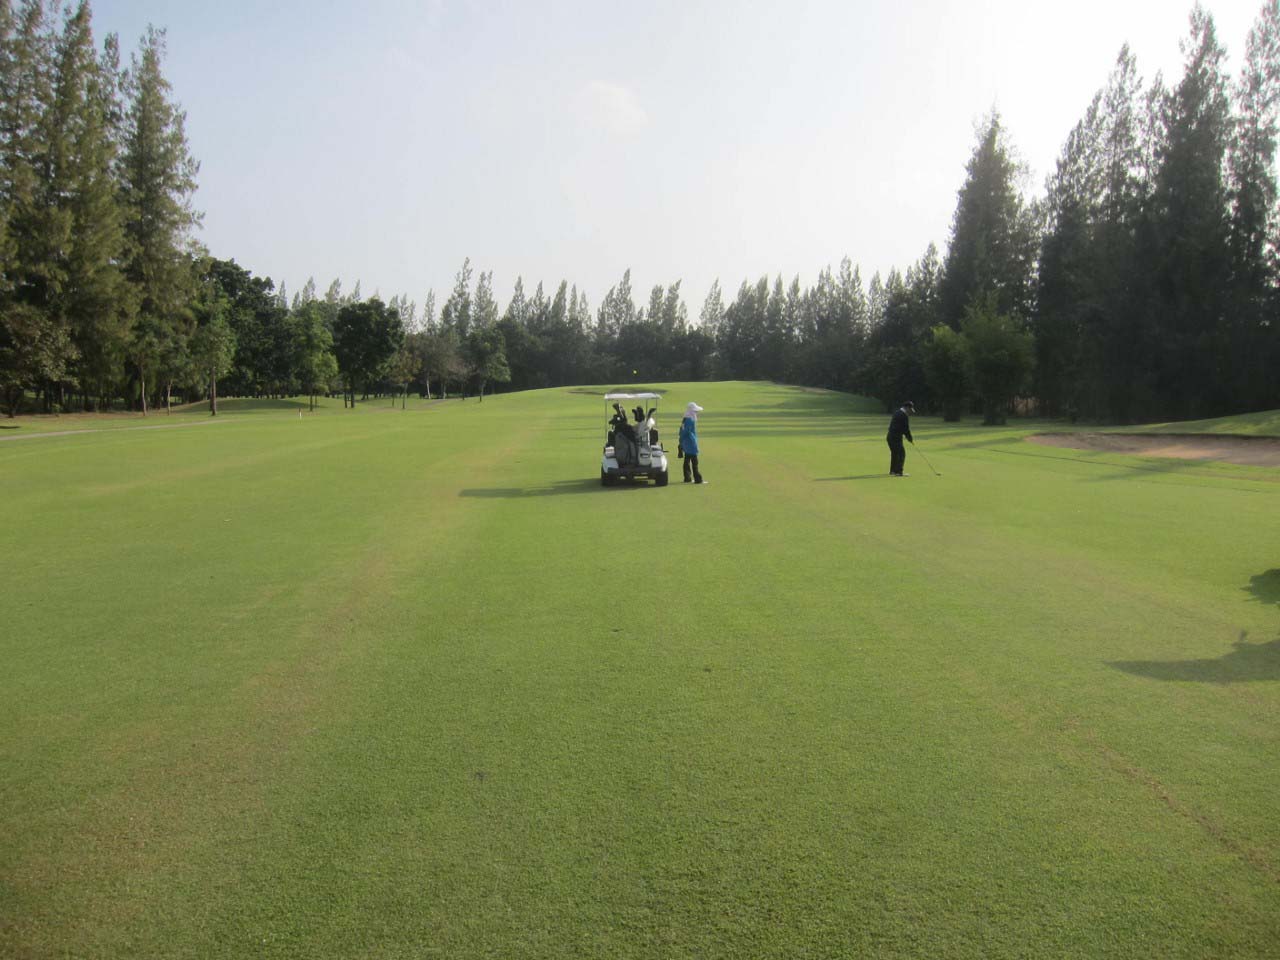 TRee-lined fairway Evergreen Hills Golf Club, Kanchanaburi